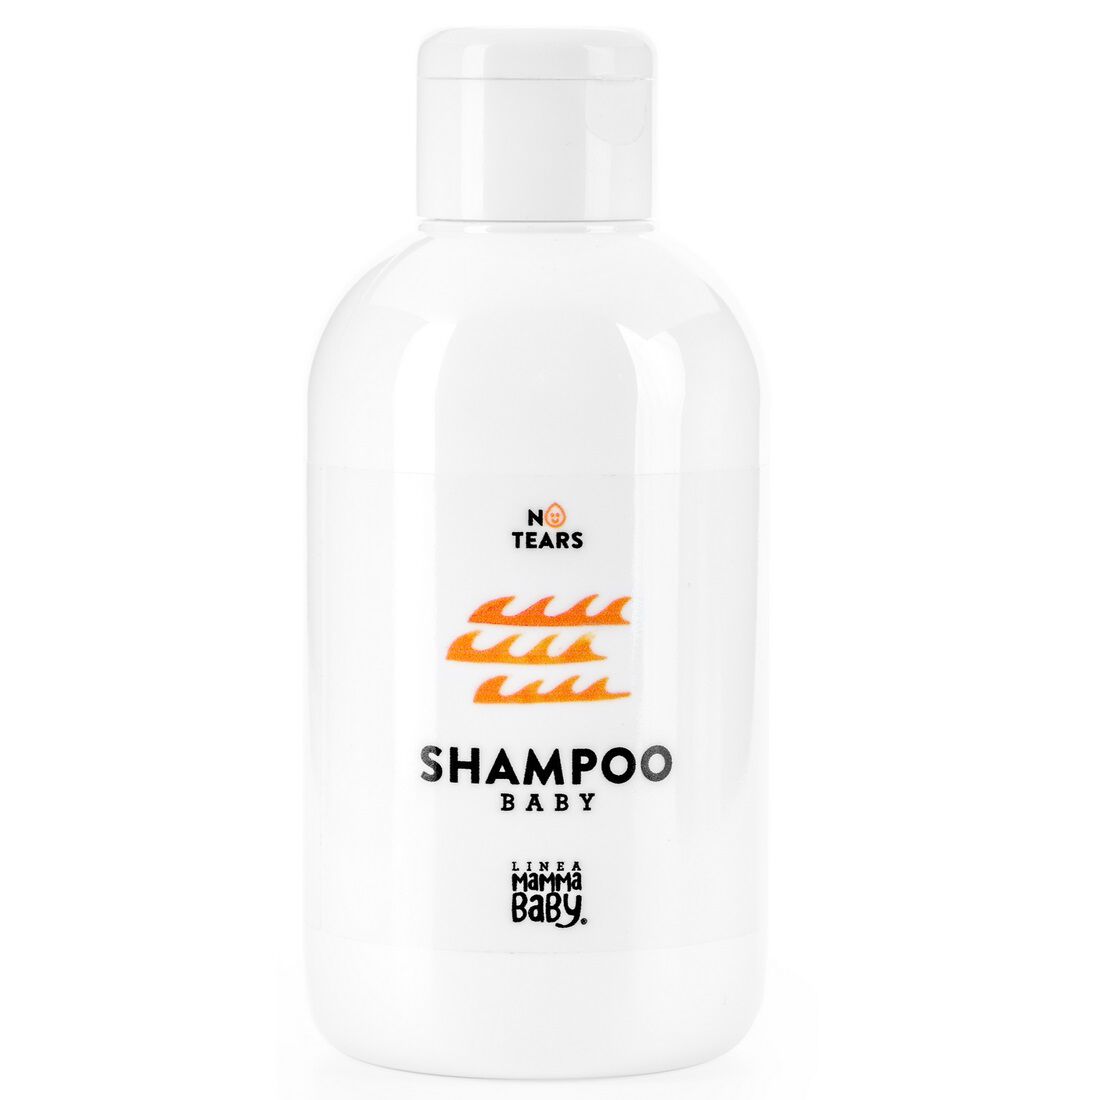 Шампунь для волос Linea Mammababy No Tears Shampoo, 250 мл цена и фото